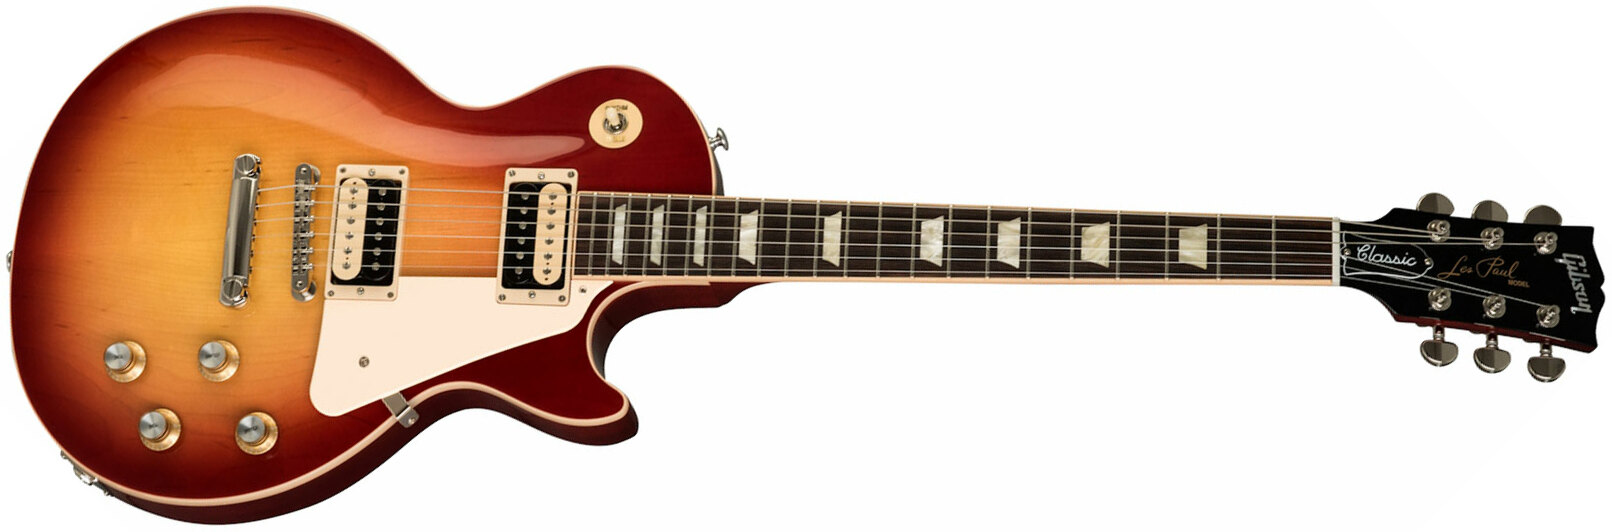 Gibson Les Paul Classic Modern 2019 2h Ht Rw - Heritage Cherry Sunburst - Enkel gesneden elektrische gitaar - Main picture